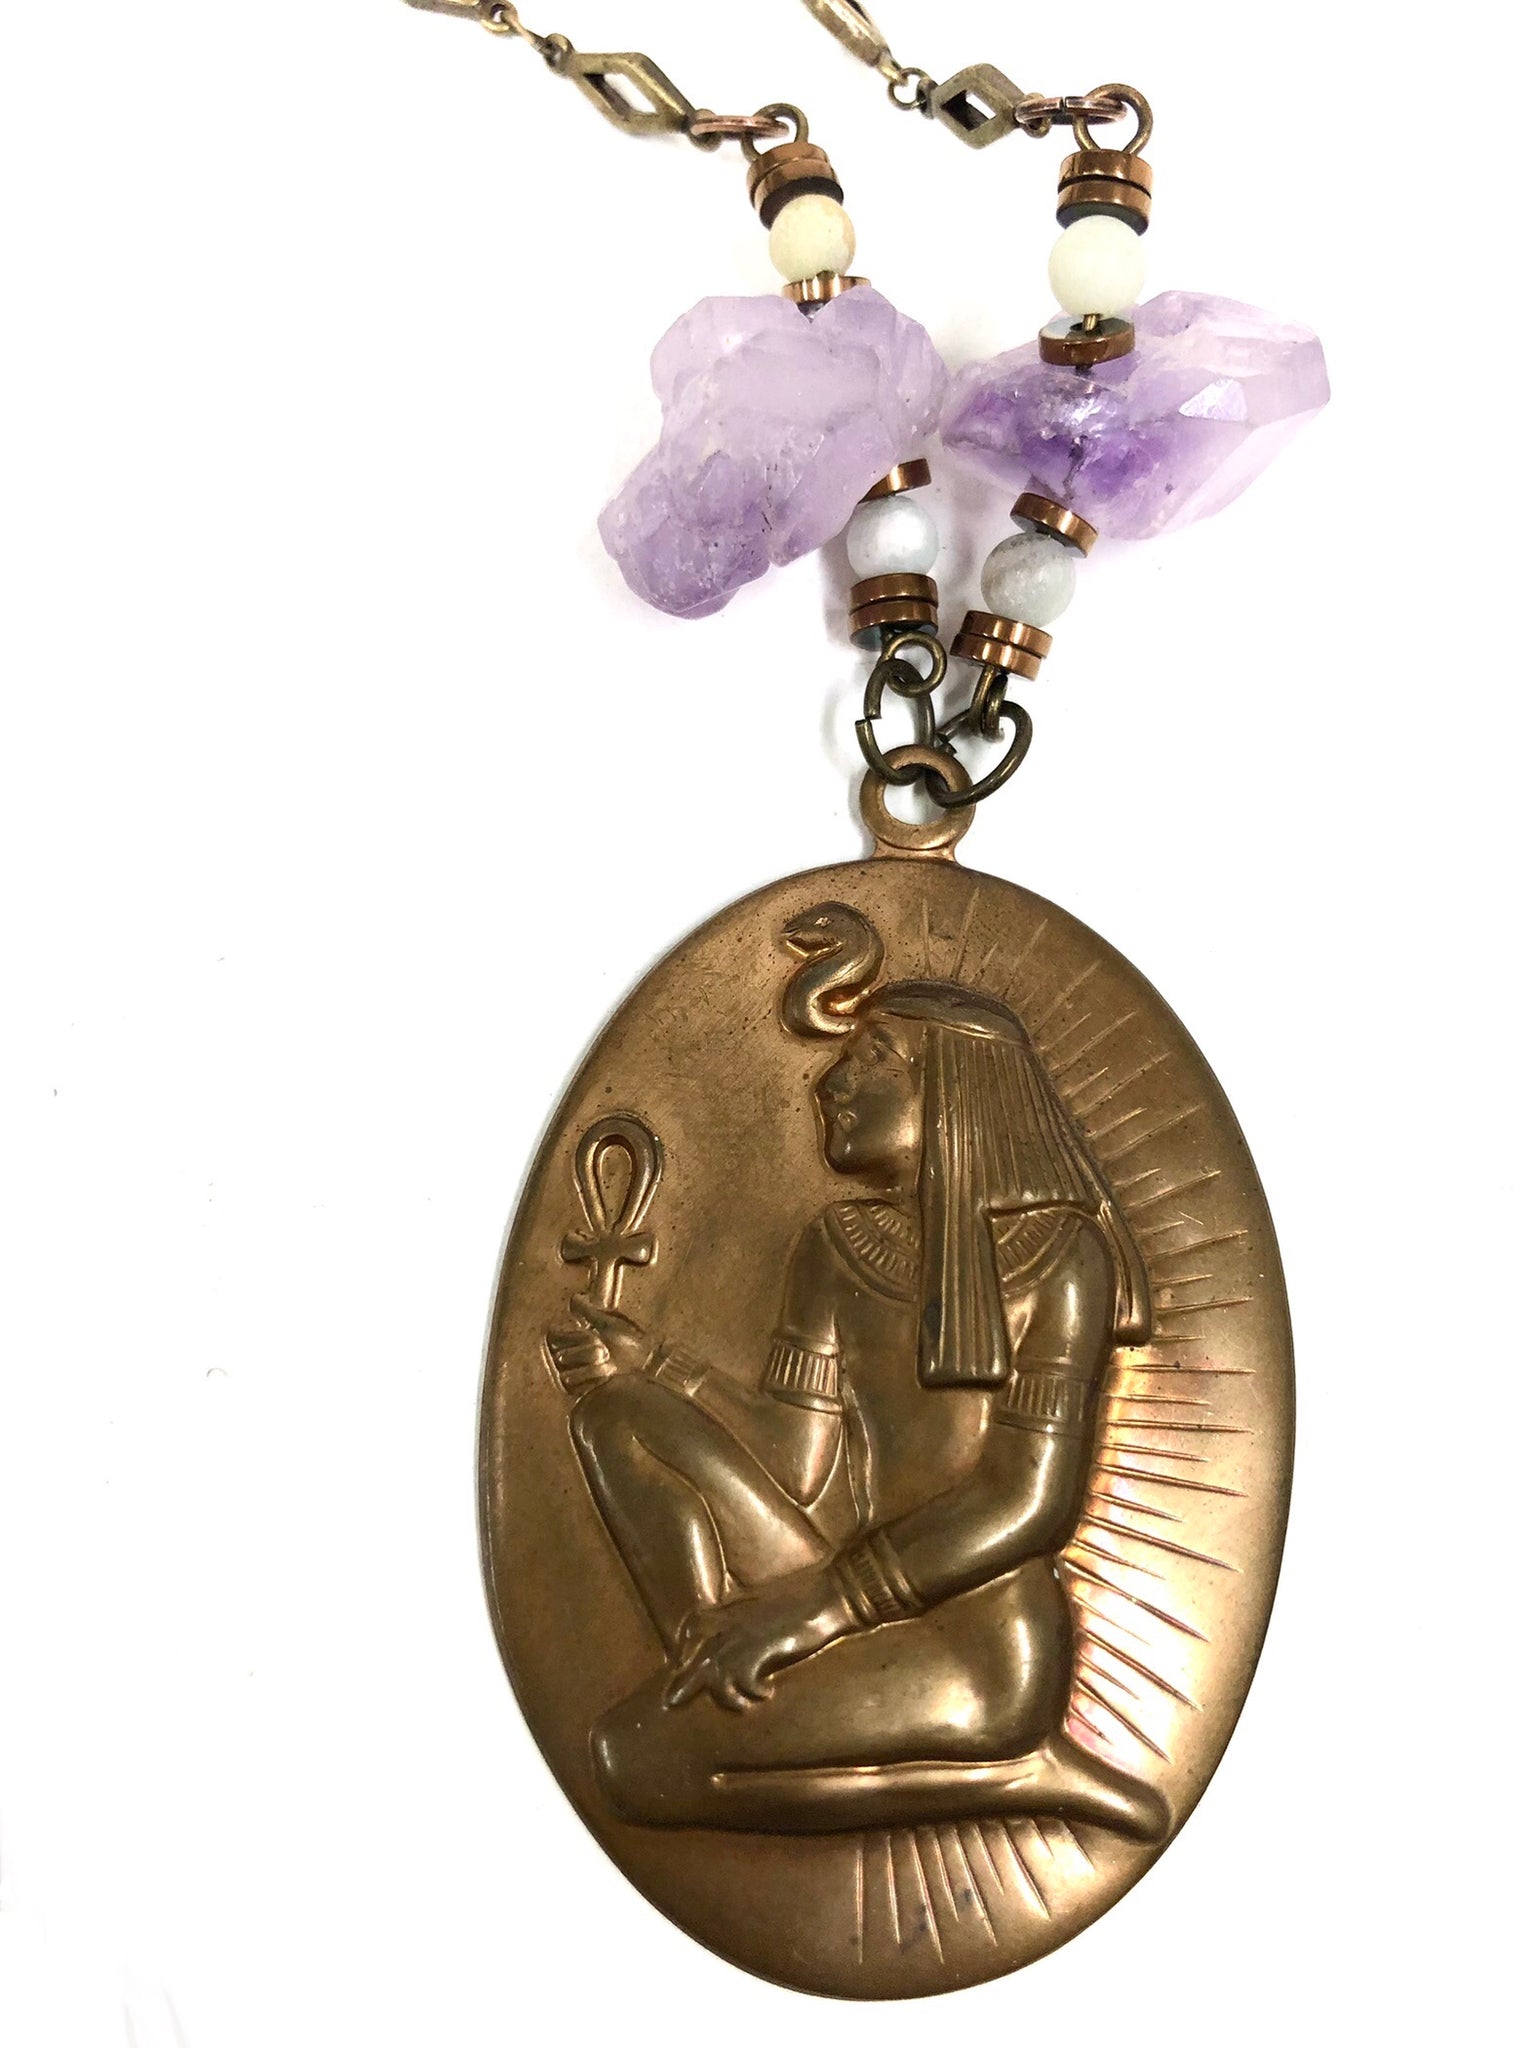 Giza necklace